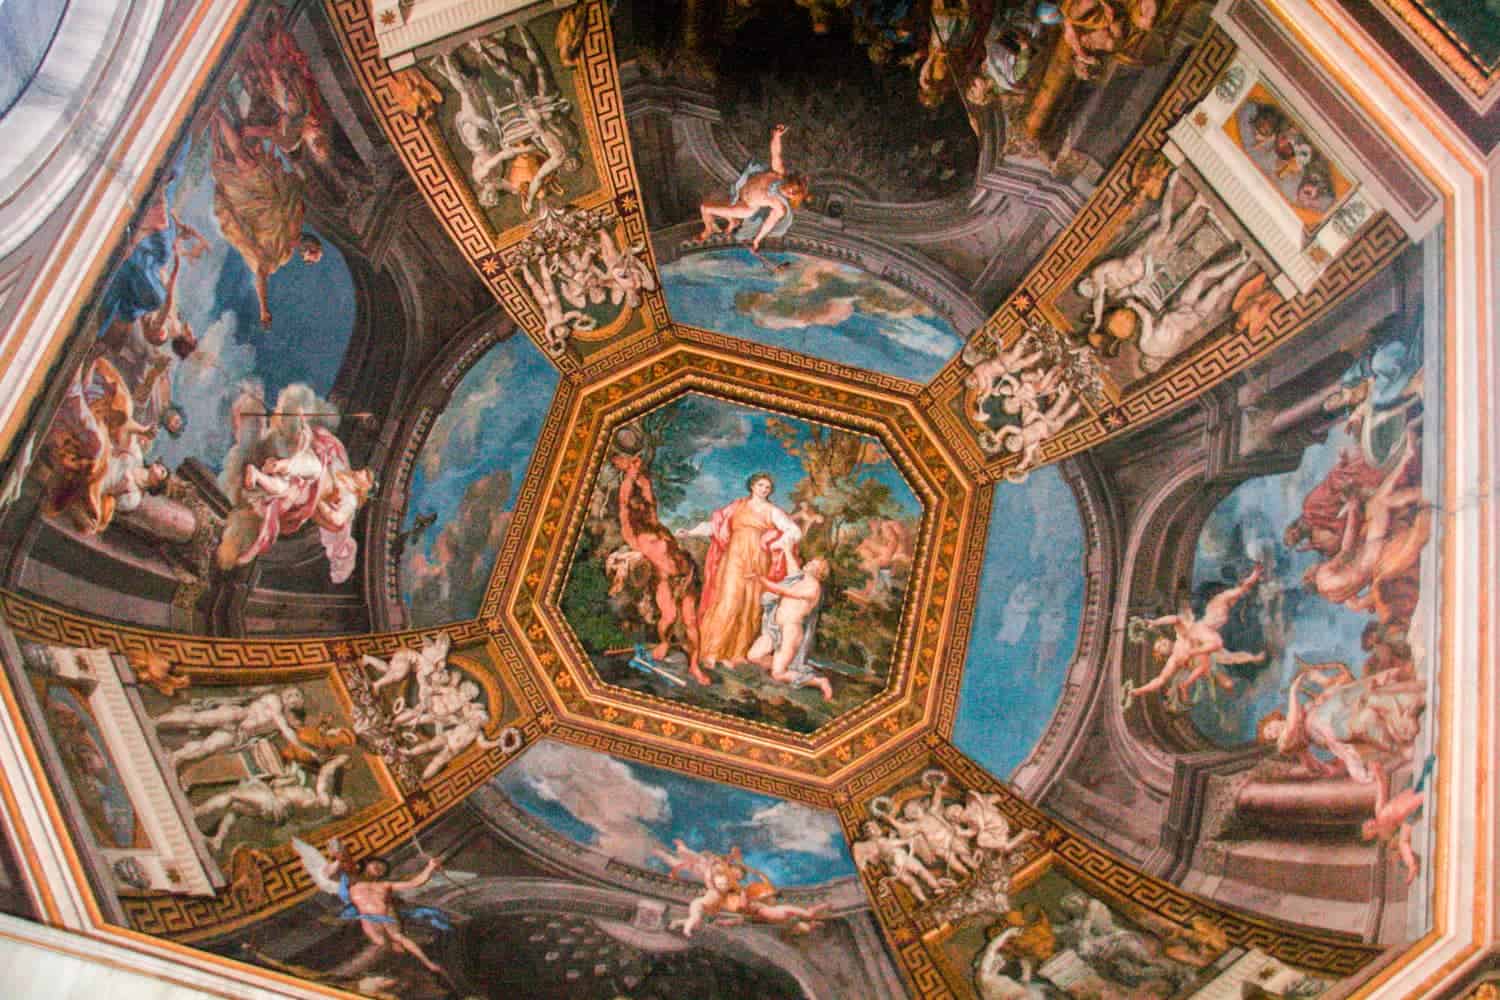 Vatican Museum Ceiling Murals, Rome